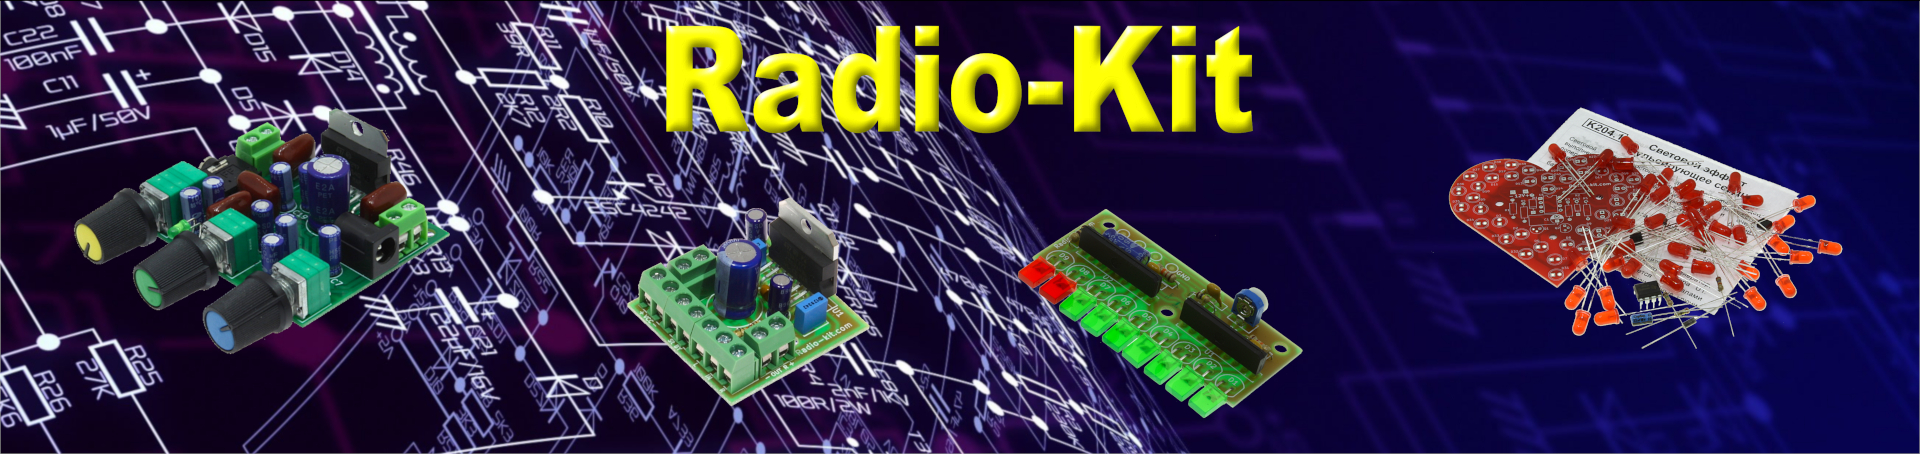 Разработка и производство наборов, модулей для проекта Radio-KIT